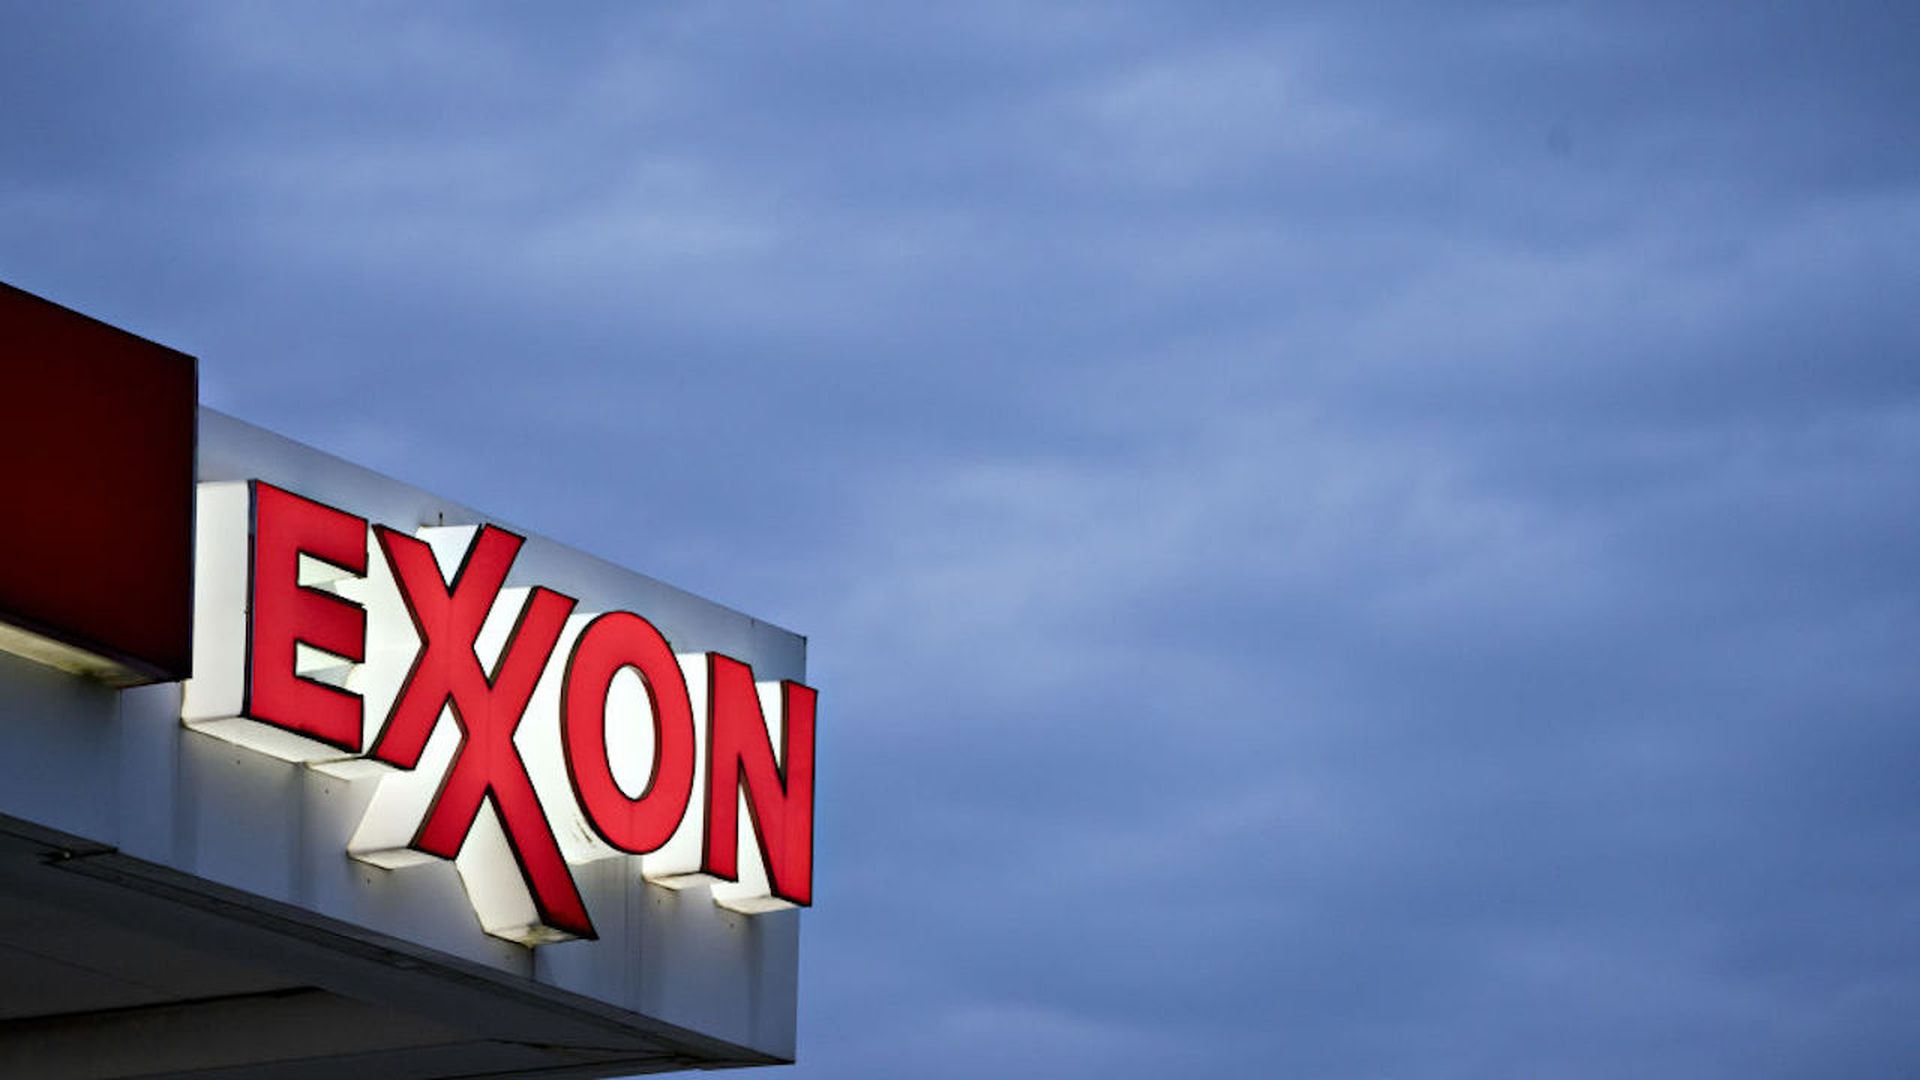 Photo of an Exxon station logo against a cloudy sky